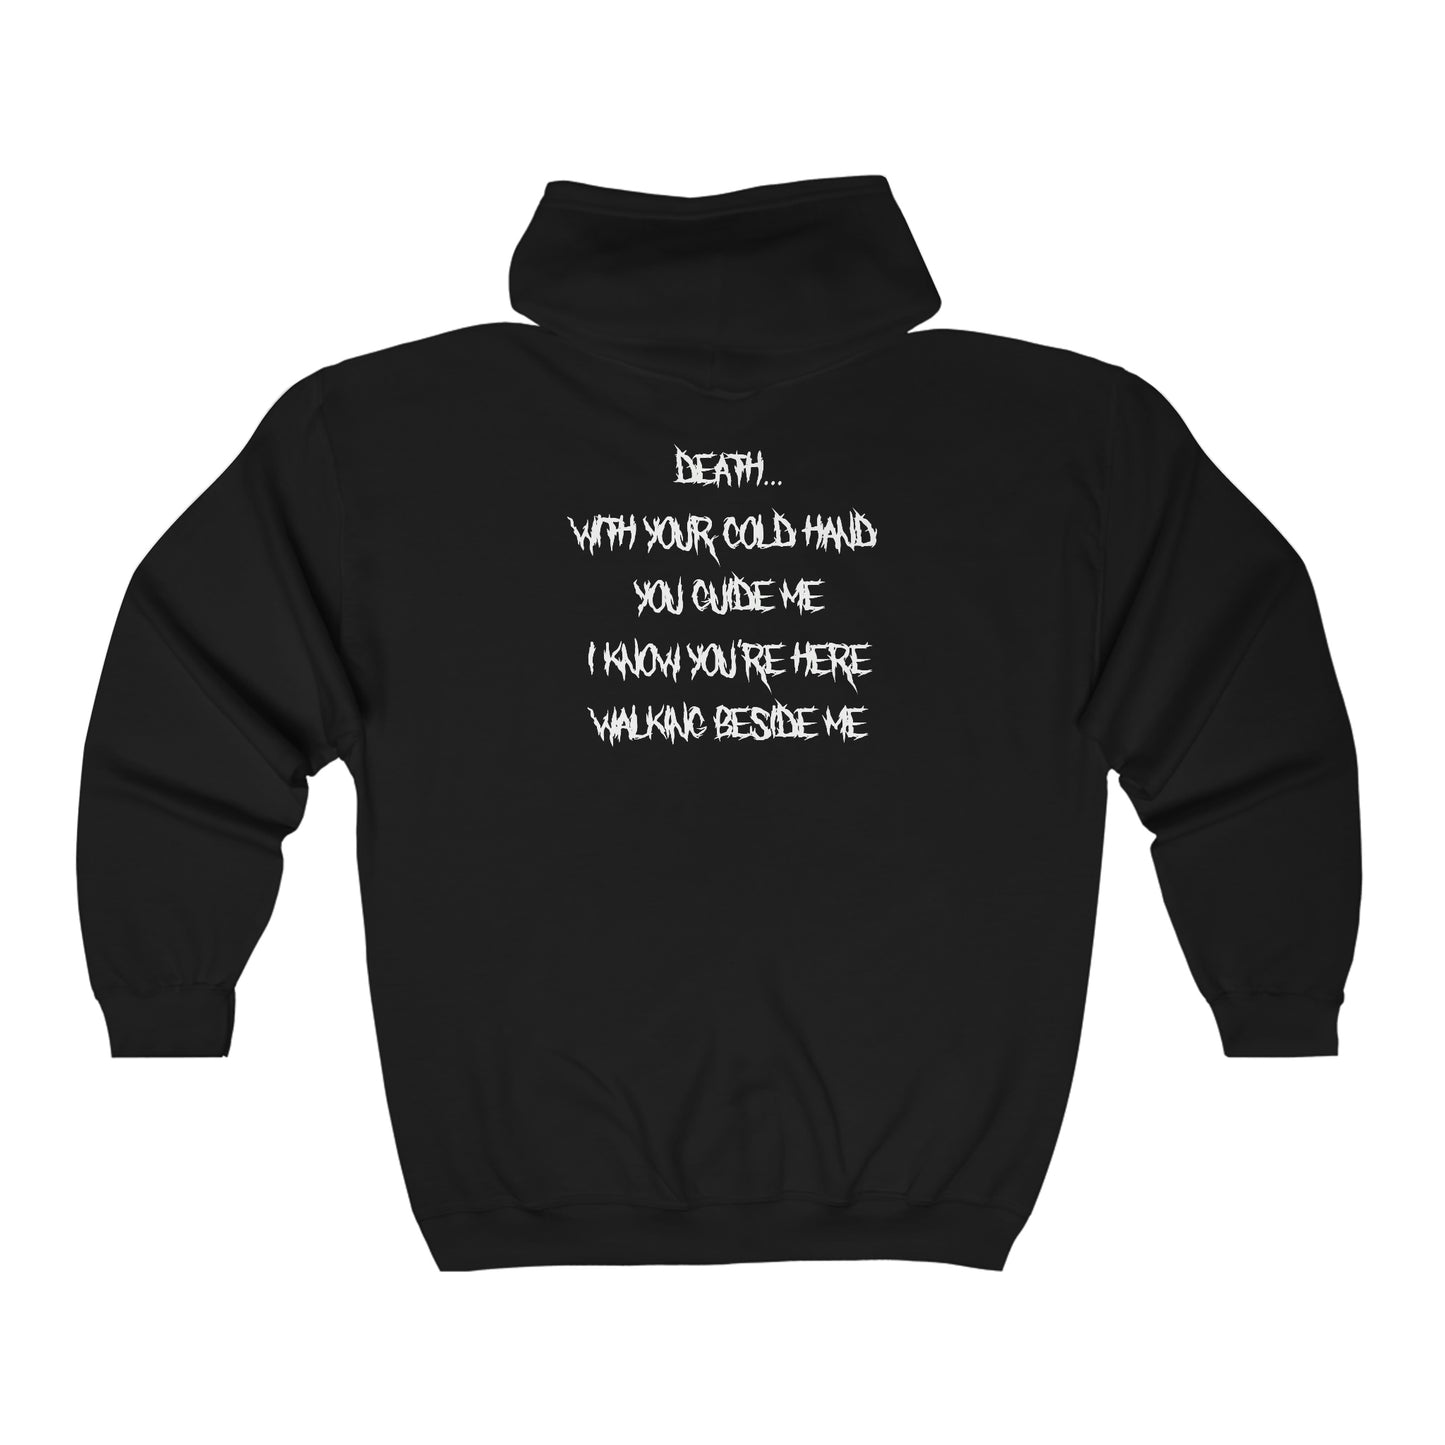 Solemn Echoes - Zip Hooded Sweatshirt (US/CANADA/MEXICO)